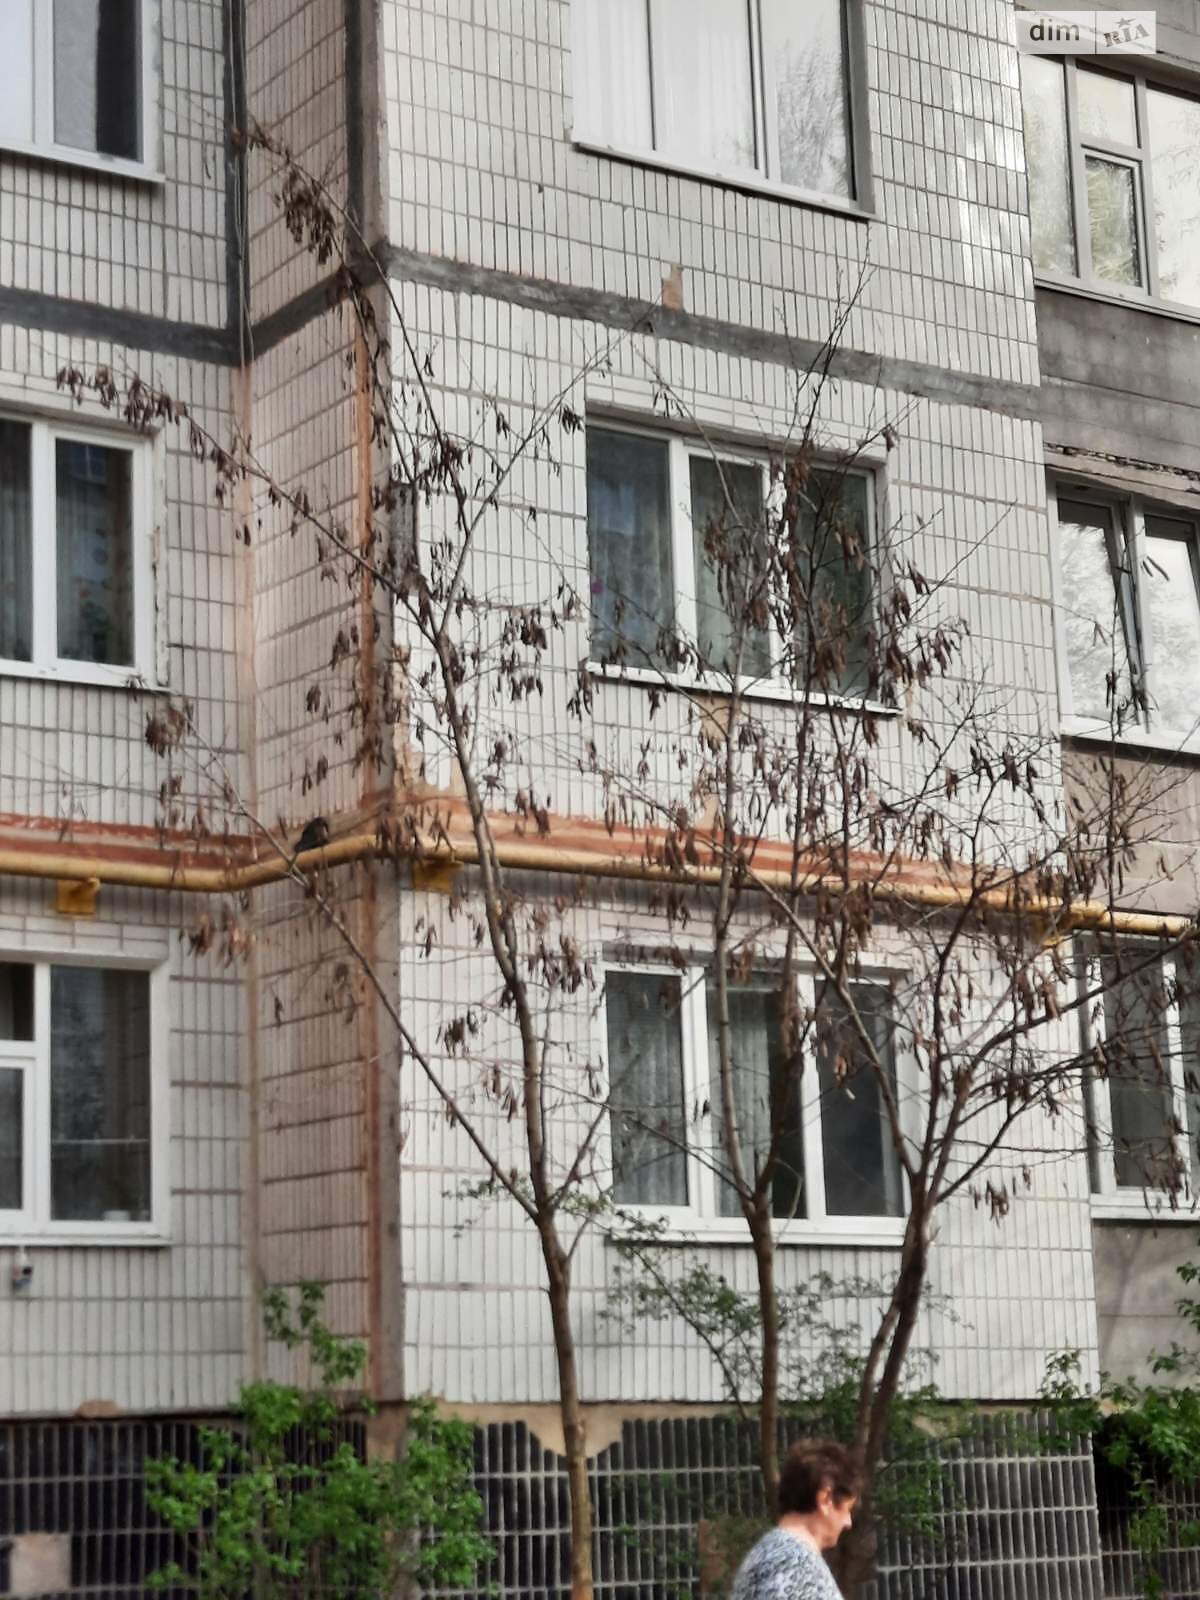 Продажа трехкомнатной квартиры в Сумах, на ул. Героев Крут 10, район 12-й микрорайон фото 1